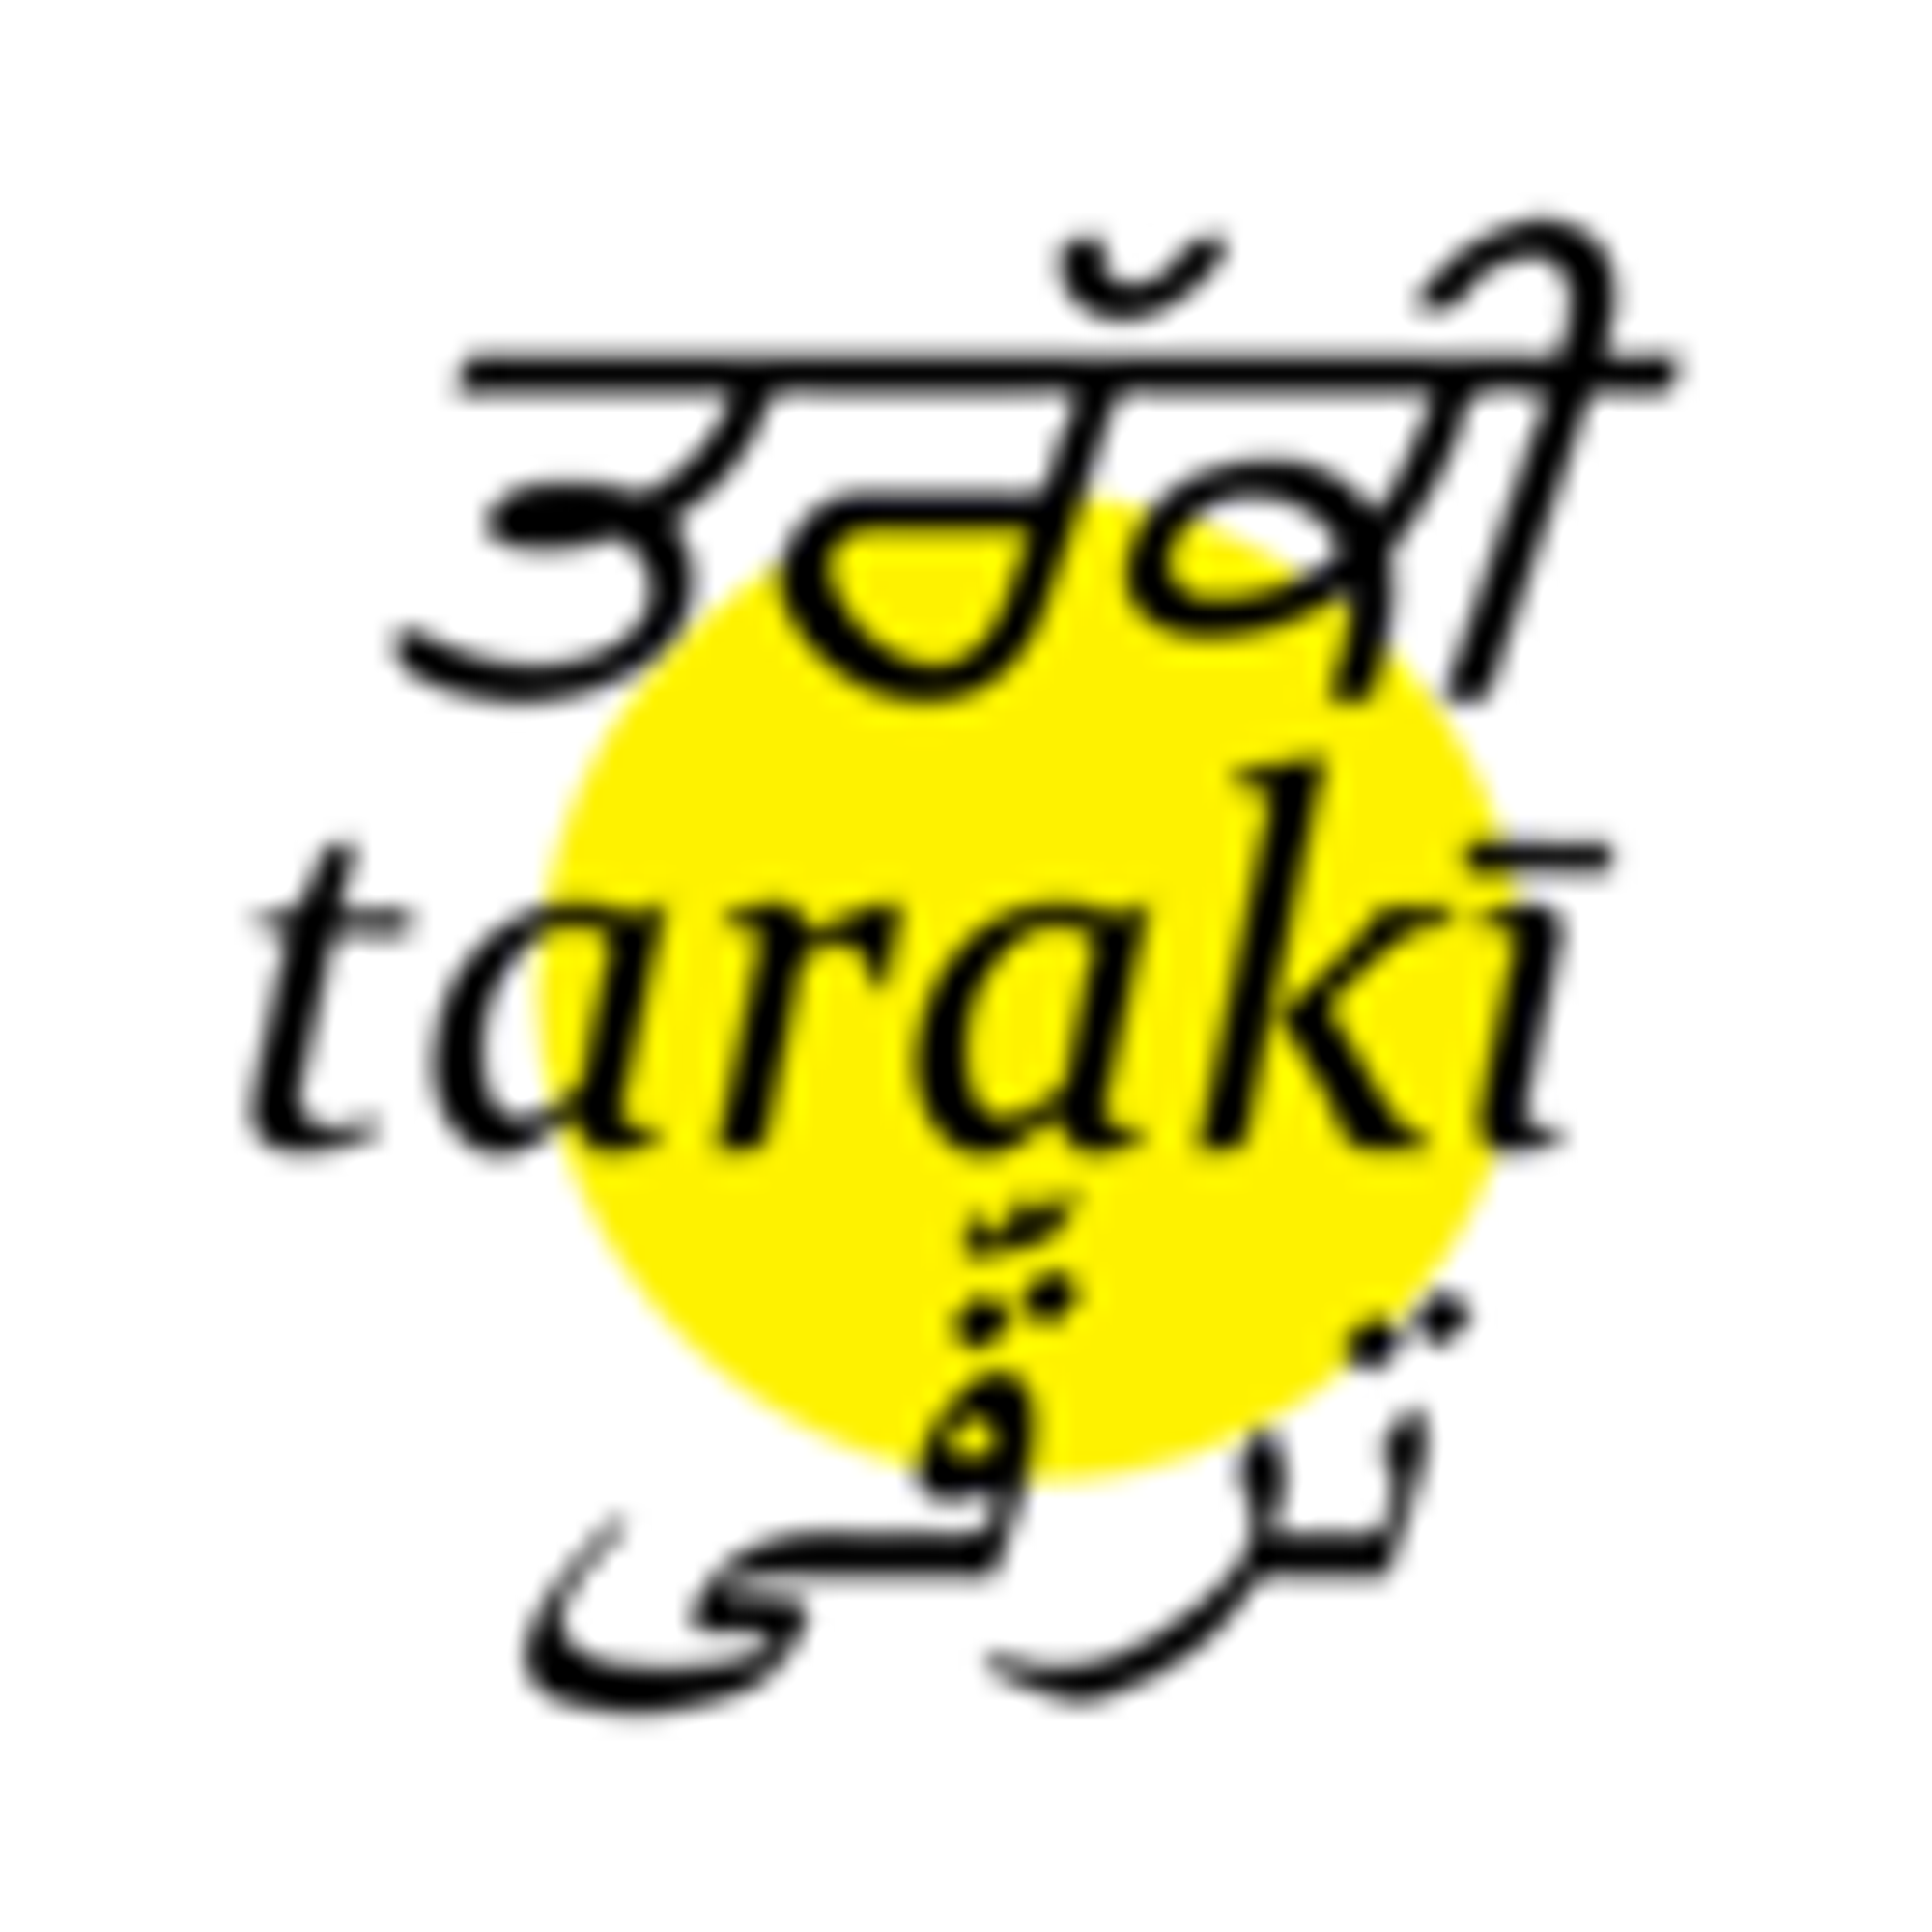 insight report - student spaces - Taraki